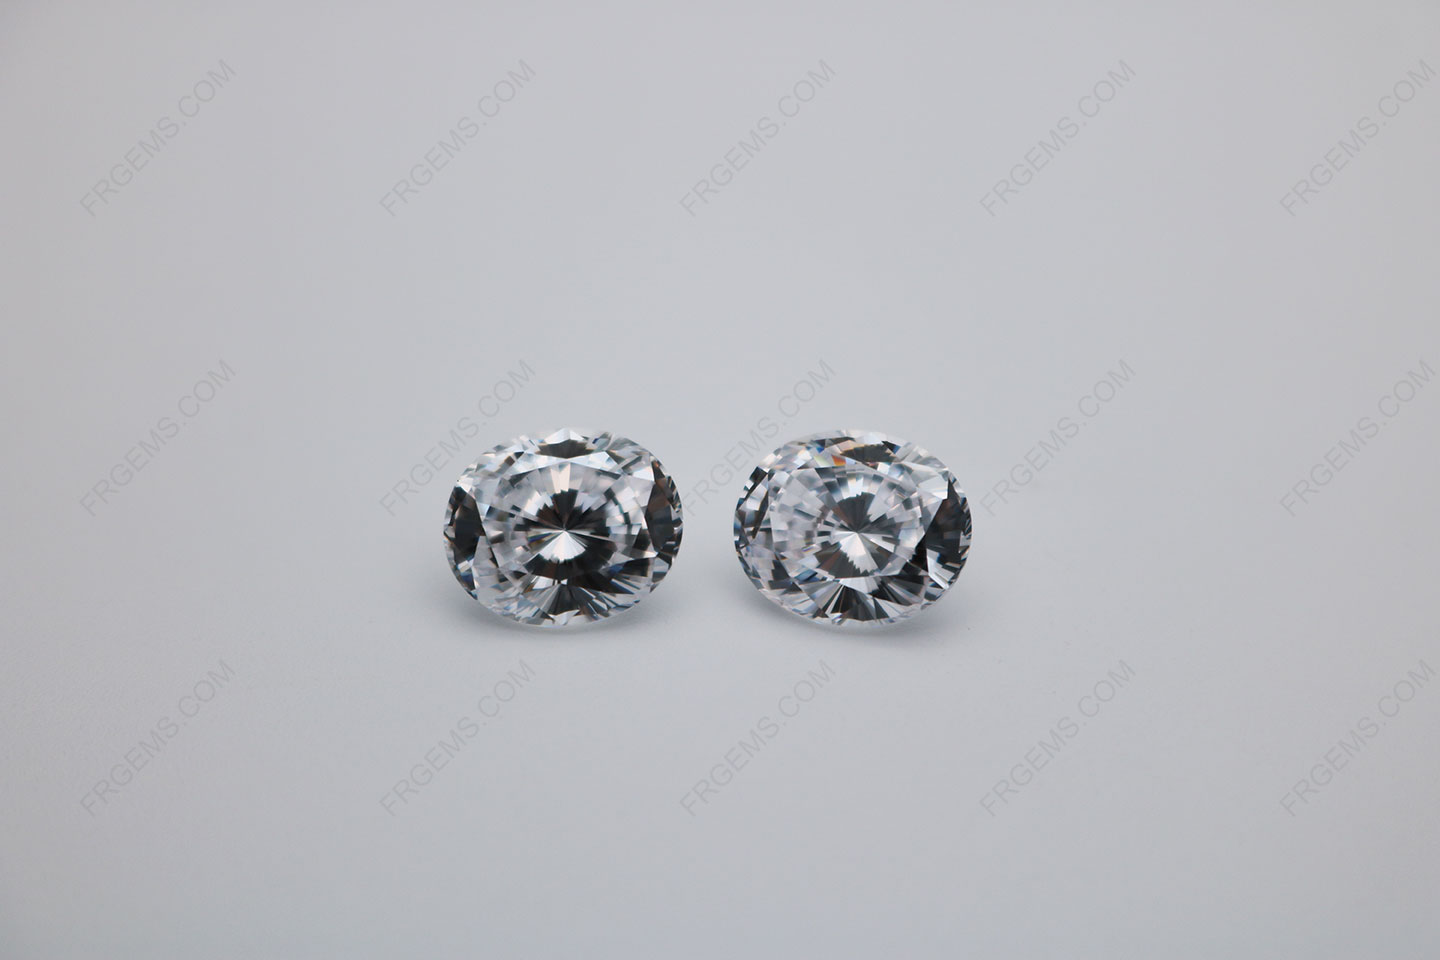 China Cubic Zirconia White Color 5A Best Quality Oval Shape Quadrillion Cut 10x8mm stones